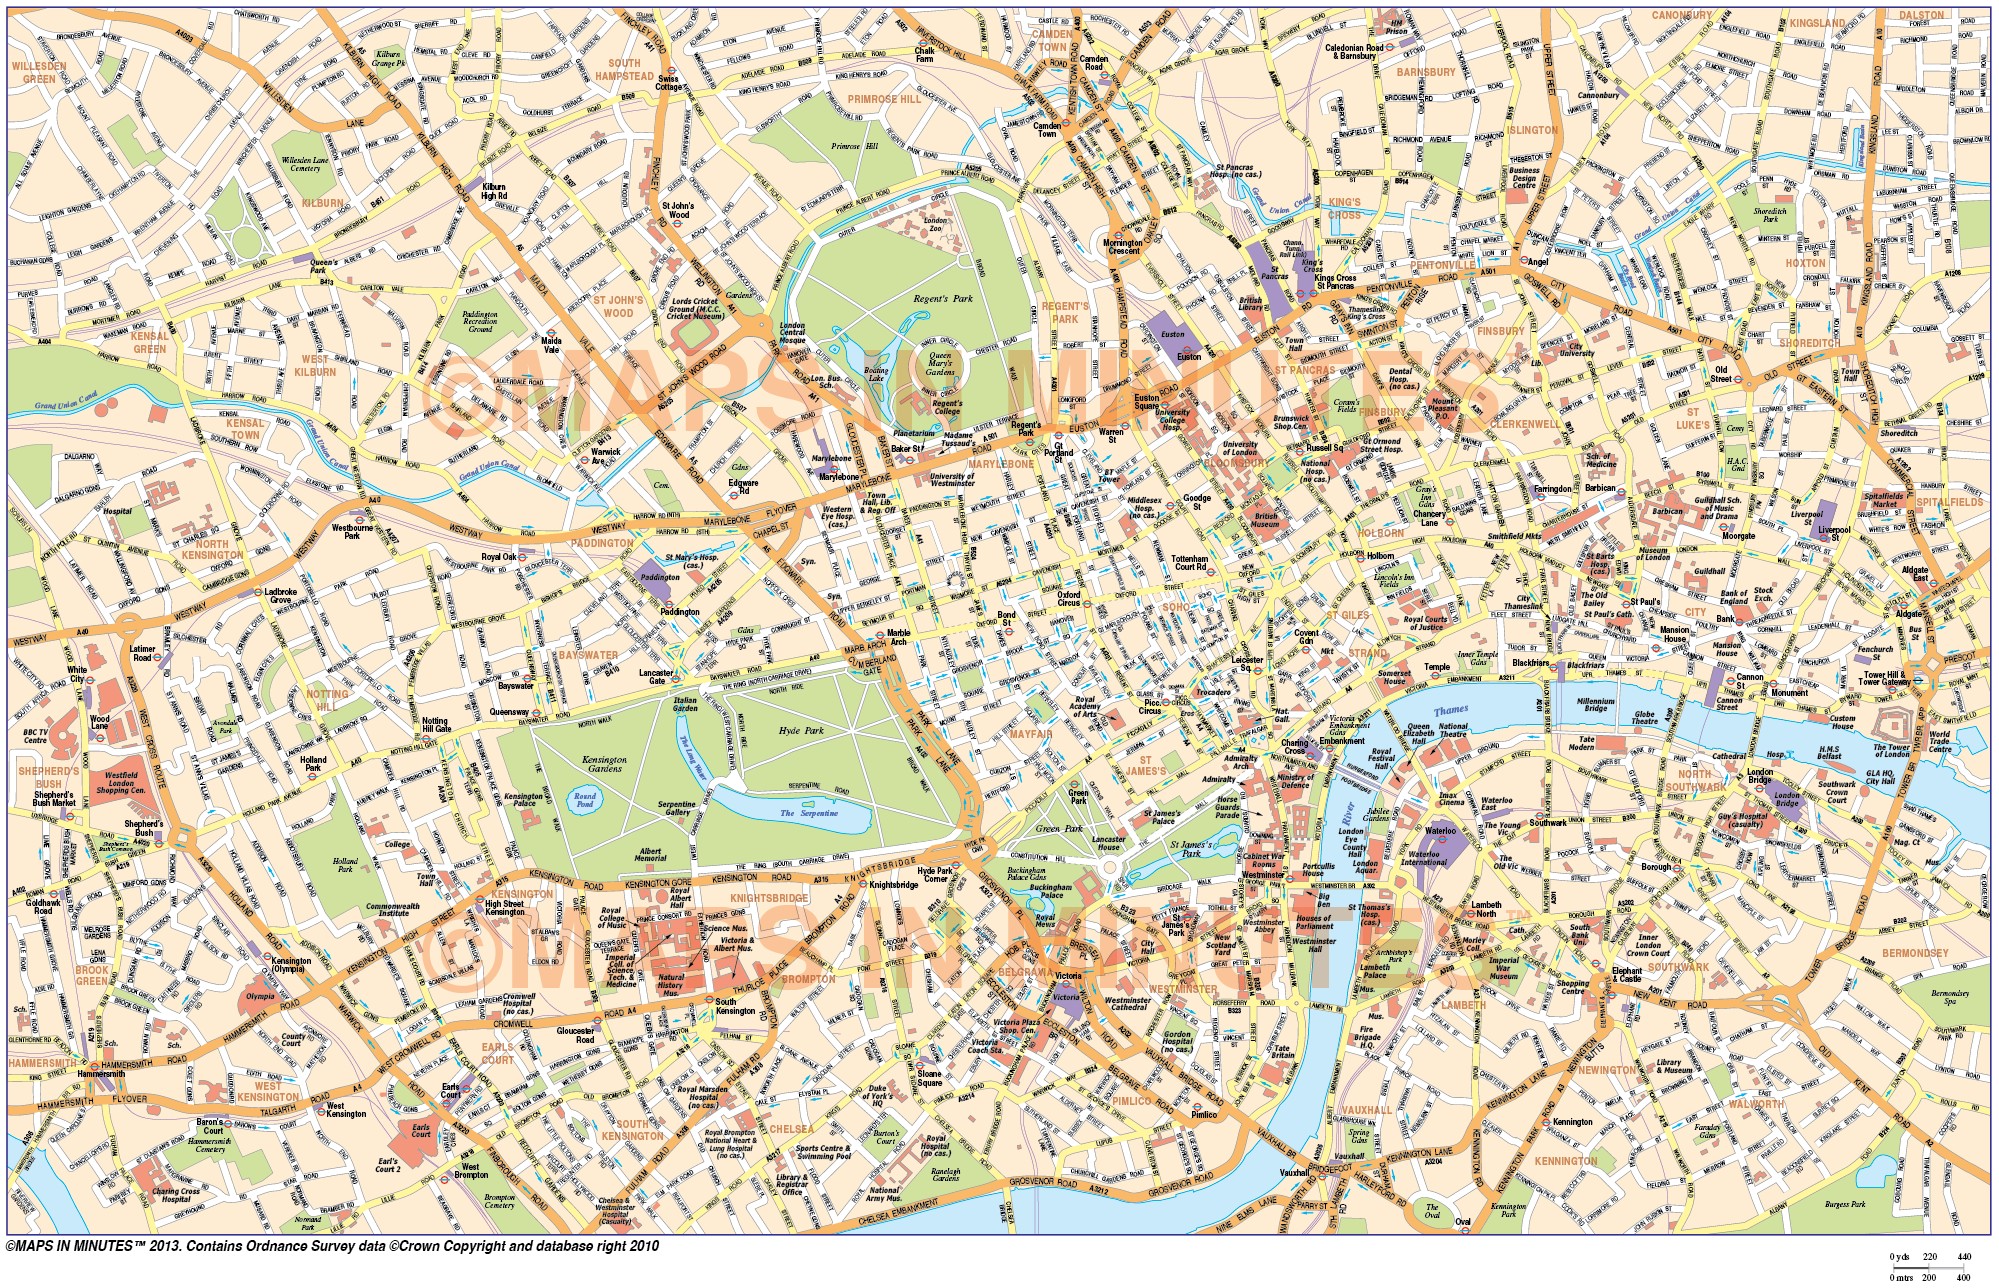 digital-vector-map-of-london-in-illustrator-editable-format-royalty-free